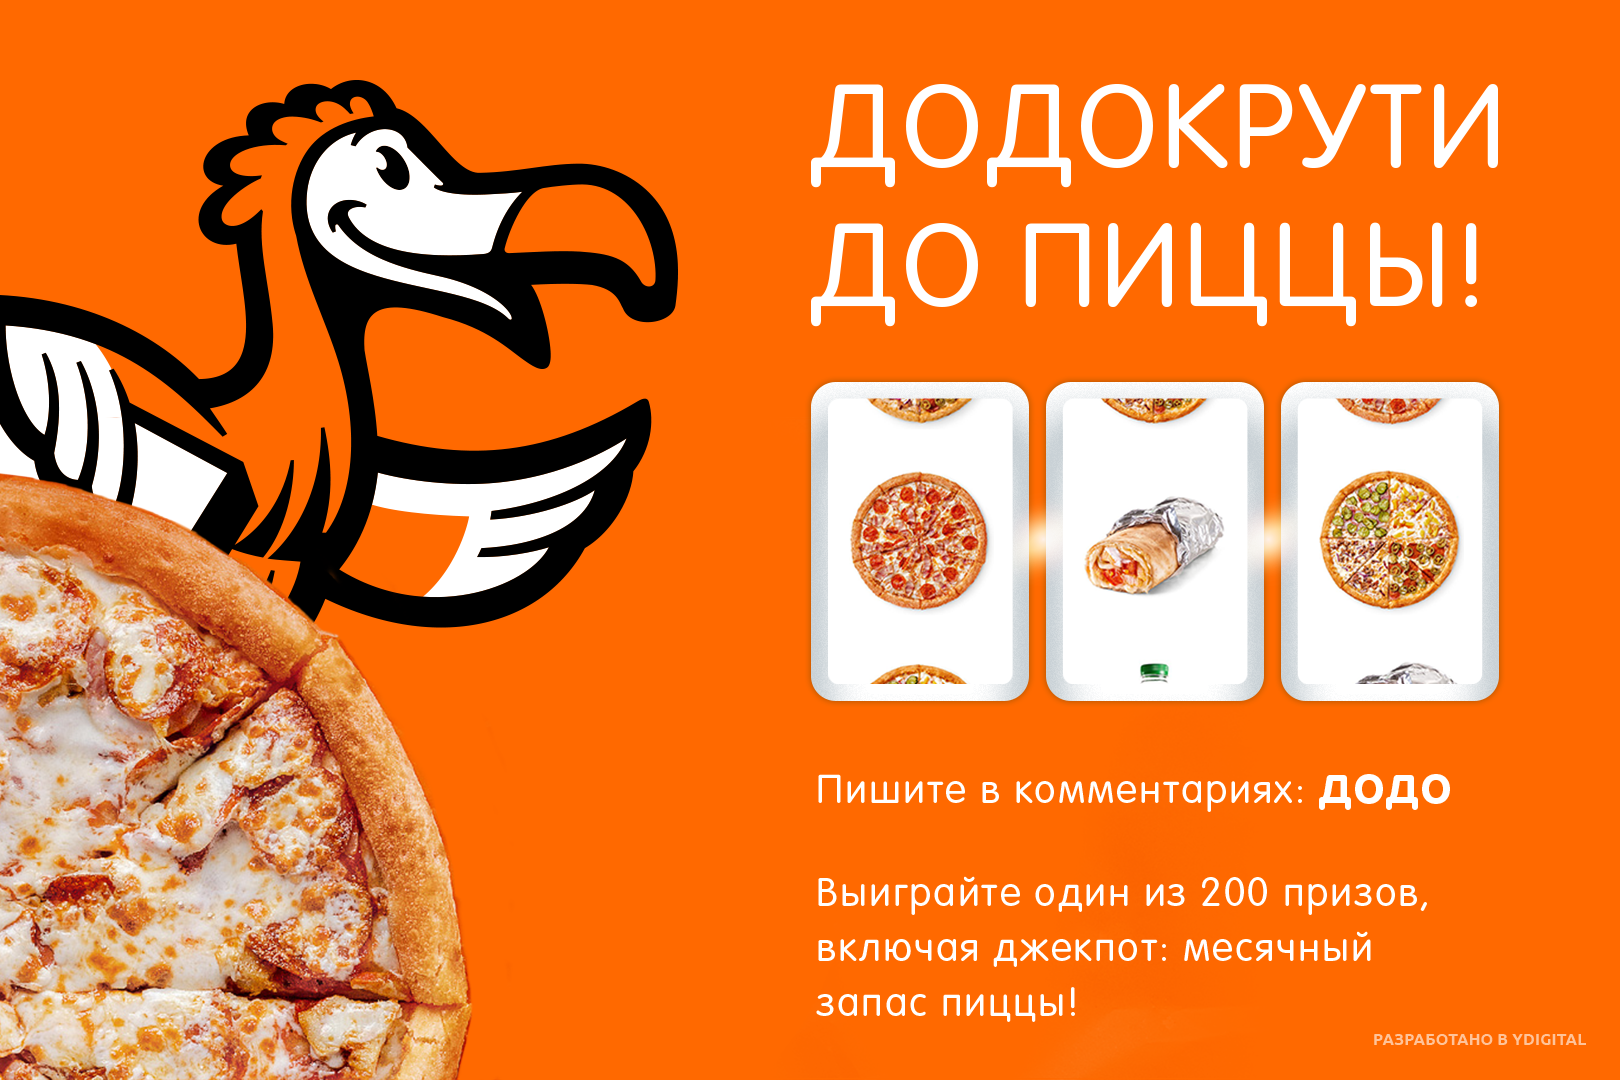 Додо хмао. Додо пицца реклама. Рекламная листовка Додо пицца. Додо пицца картинки. Баннеры рекламные Додо пиццерии.